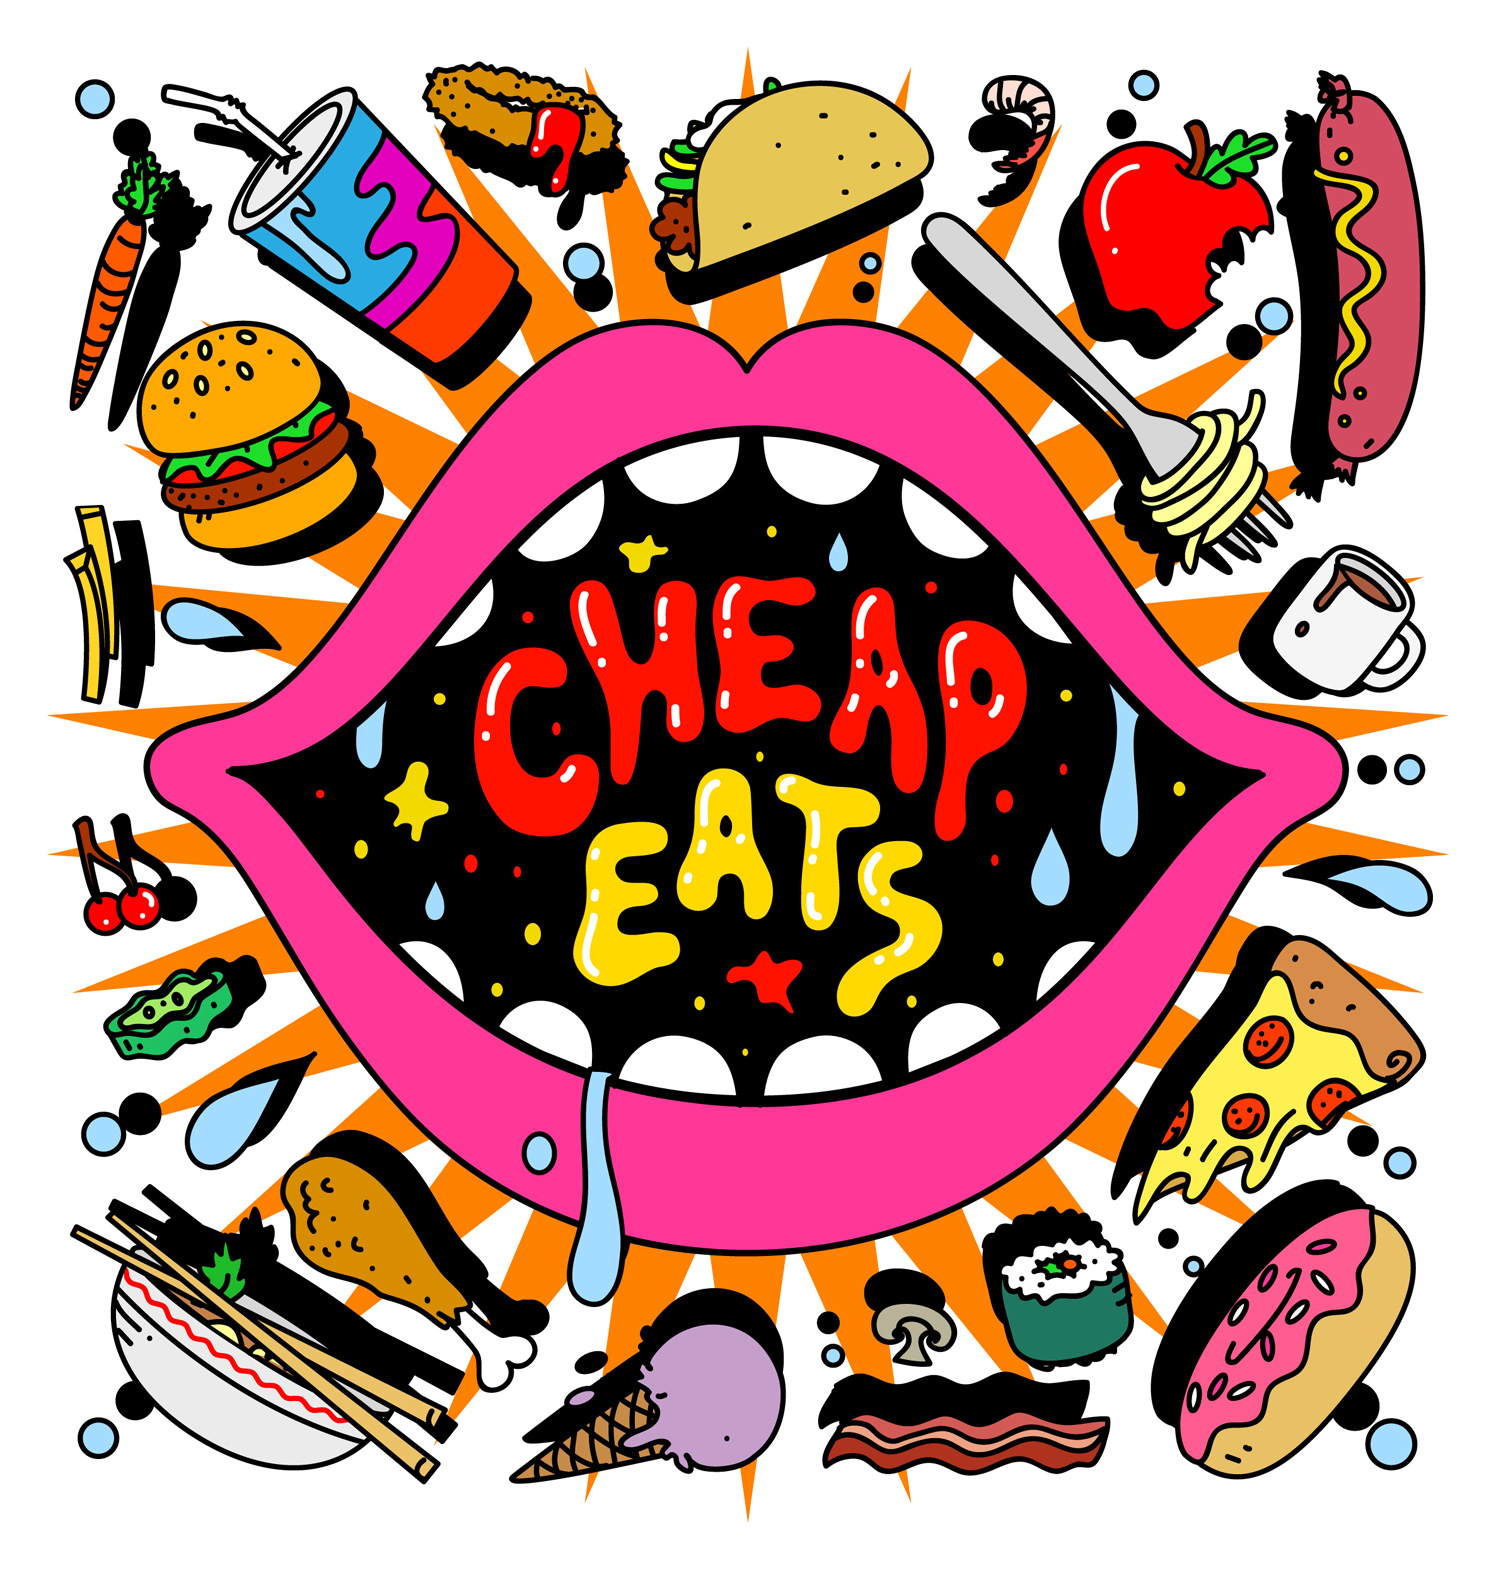 Cheap Eats / indianapolis Magazine